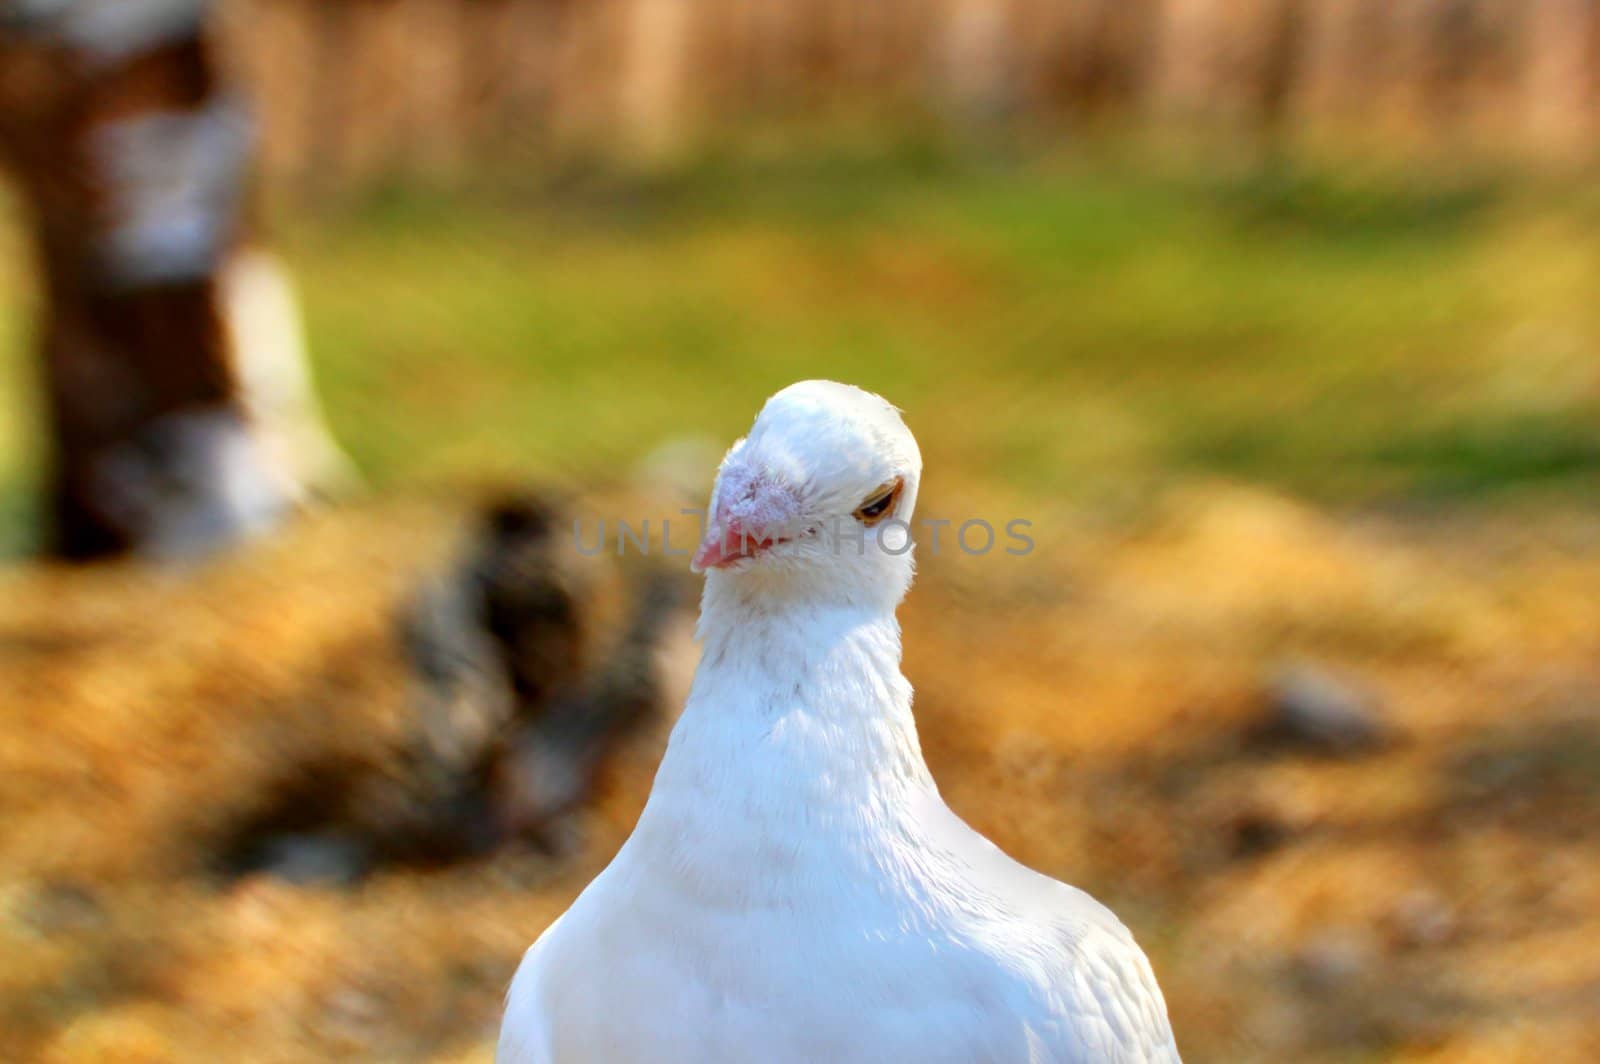 portrait of a purebred white pigeon at a farm